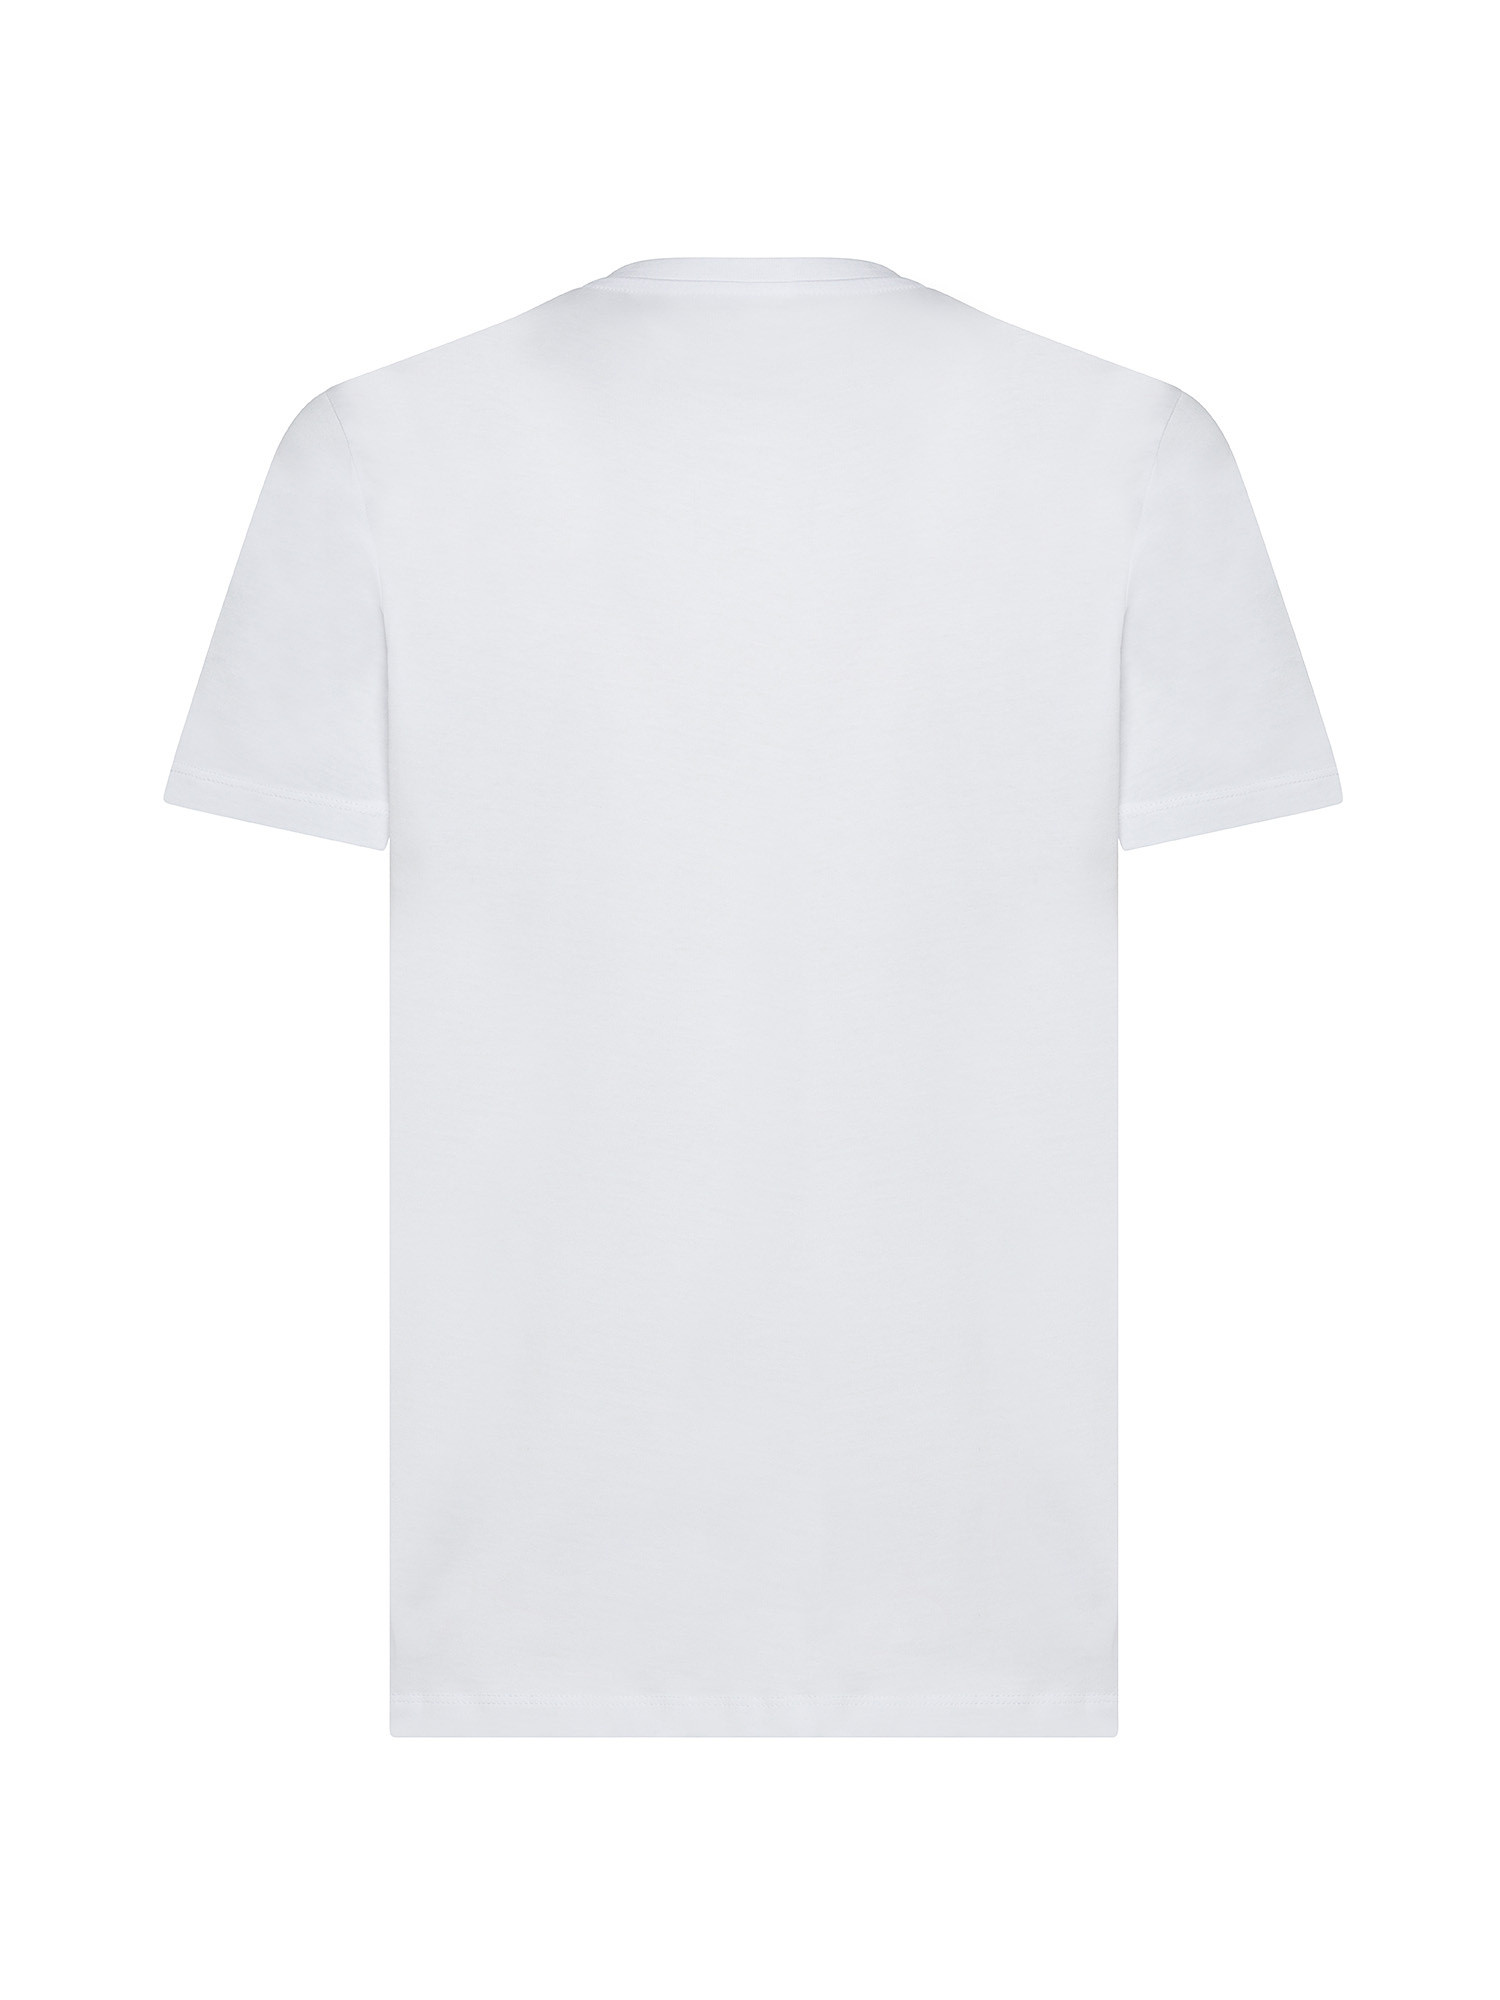 Jack & Jones - T-shirt in cotone, Bianco, large image number 1